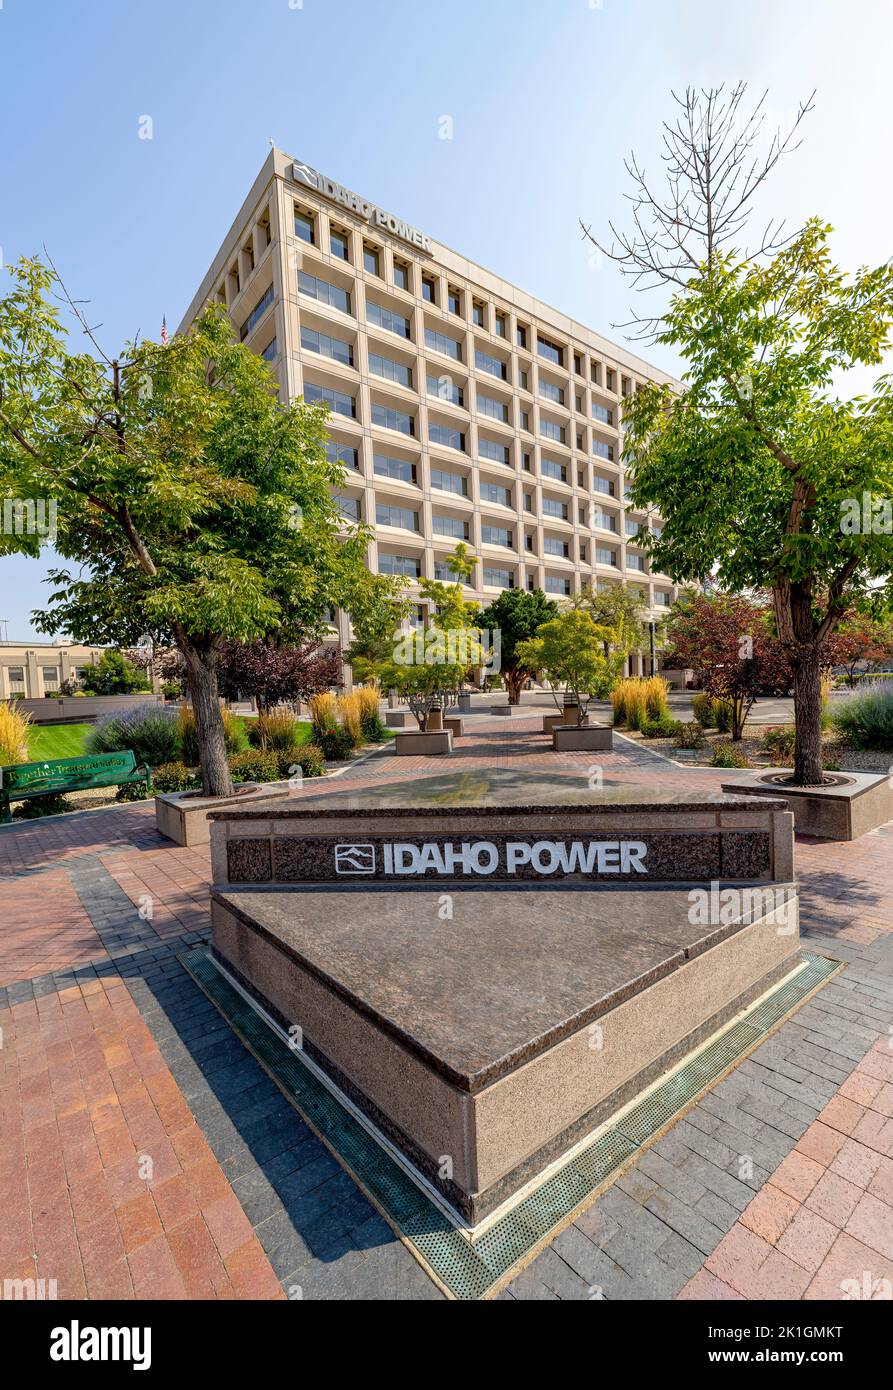 Idaho Power sign and headquarters in Boise Idaho Stock Photo